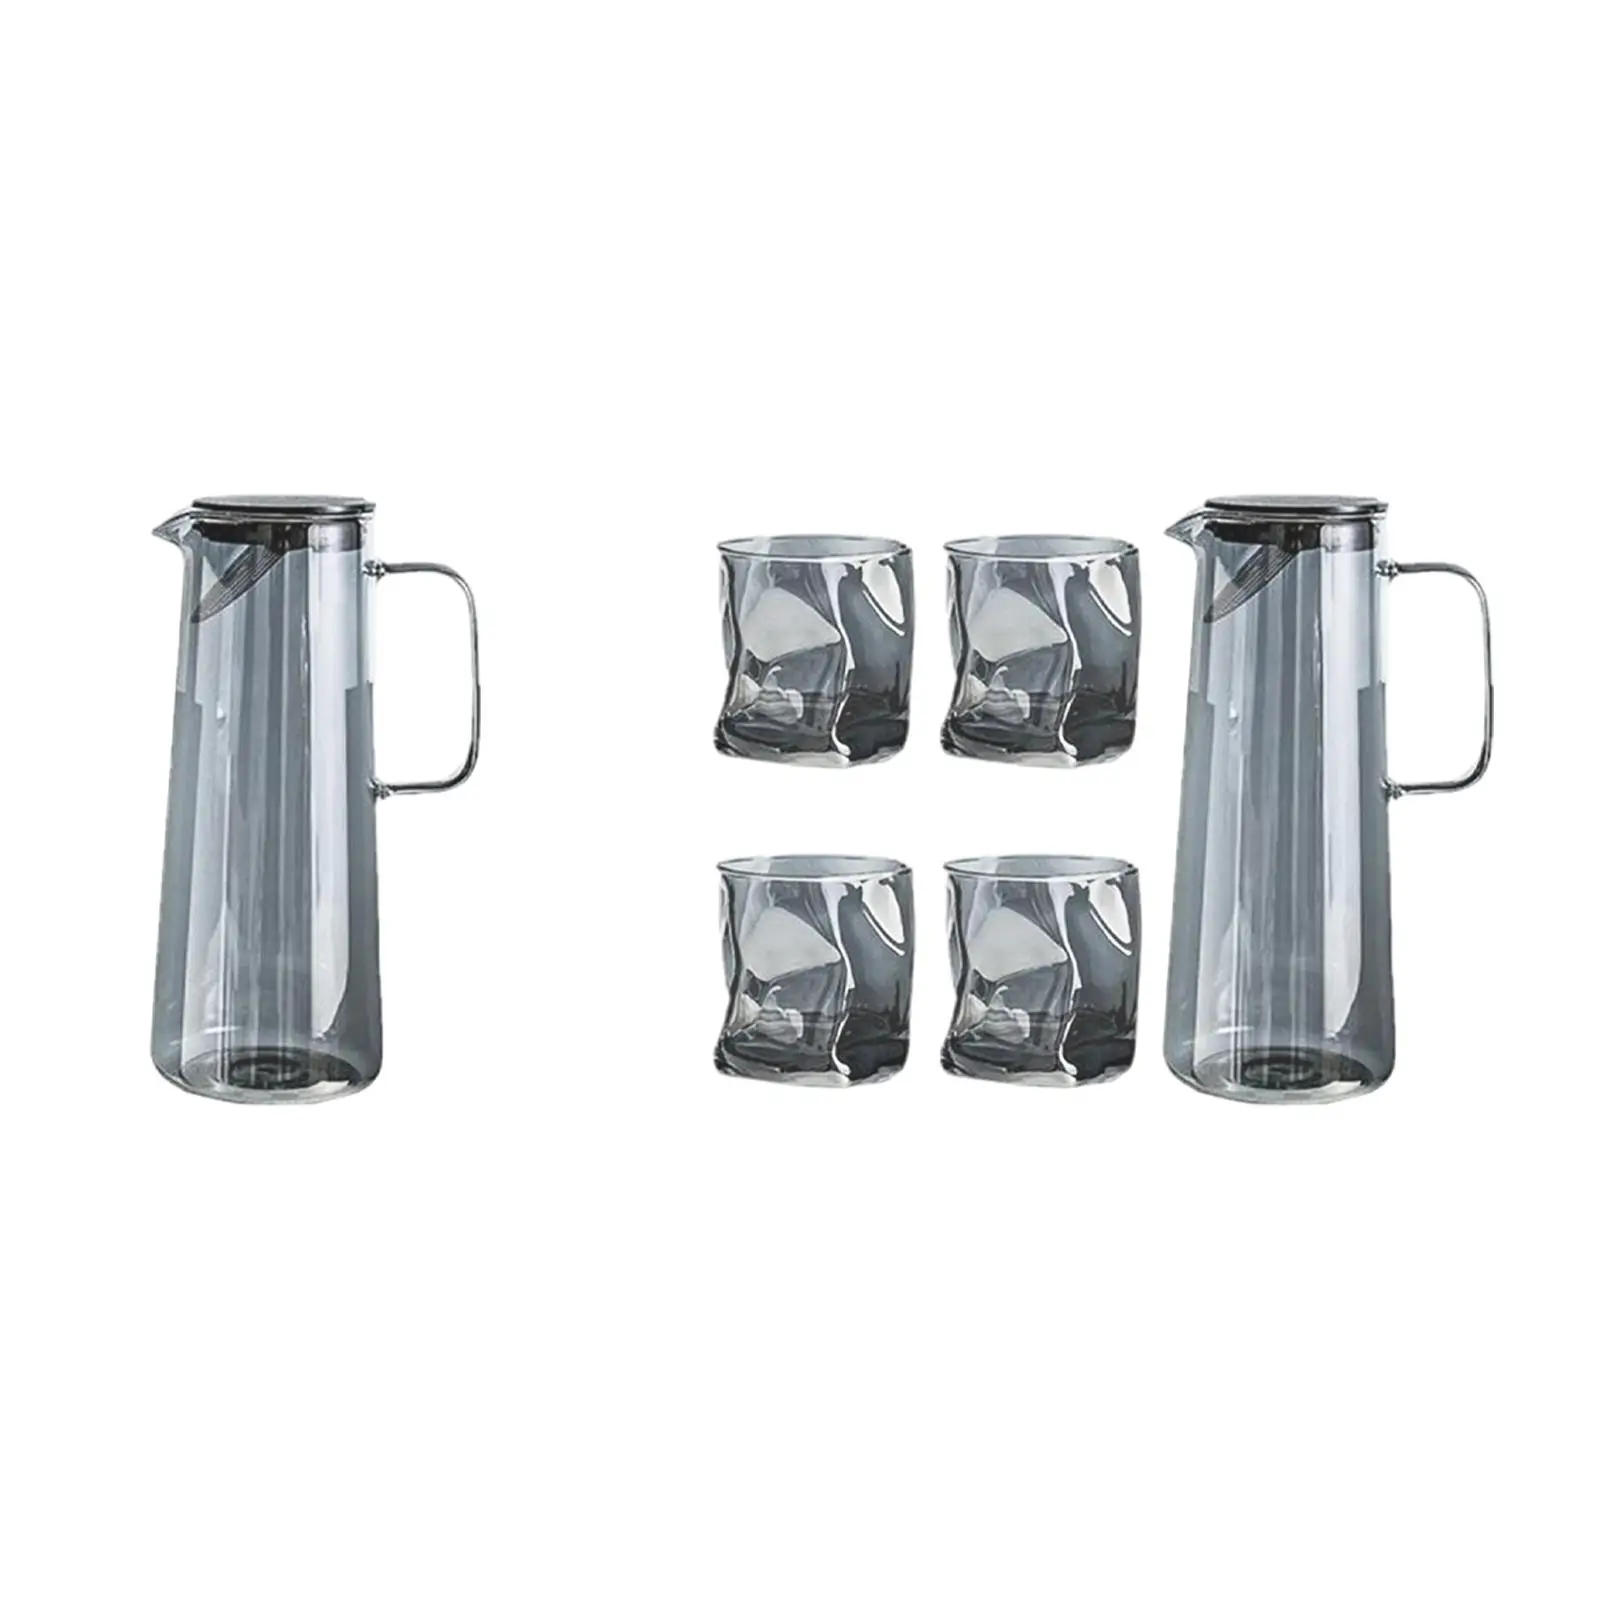 Borosilicate Glass Teapot 1450ml Juice Carafe Heat Resistant Iced Tea Pitcher for Juice Office Coffee Lemonade Hot Cold Beverage